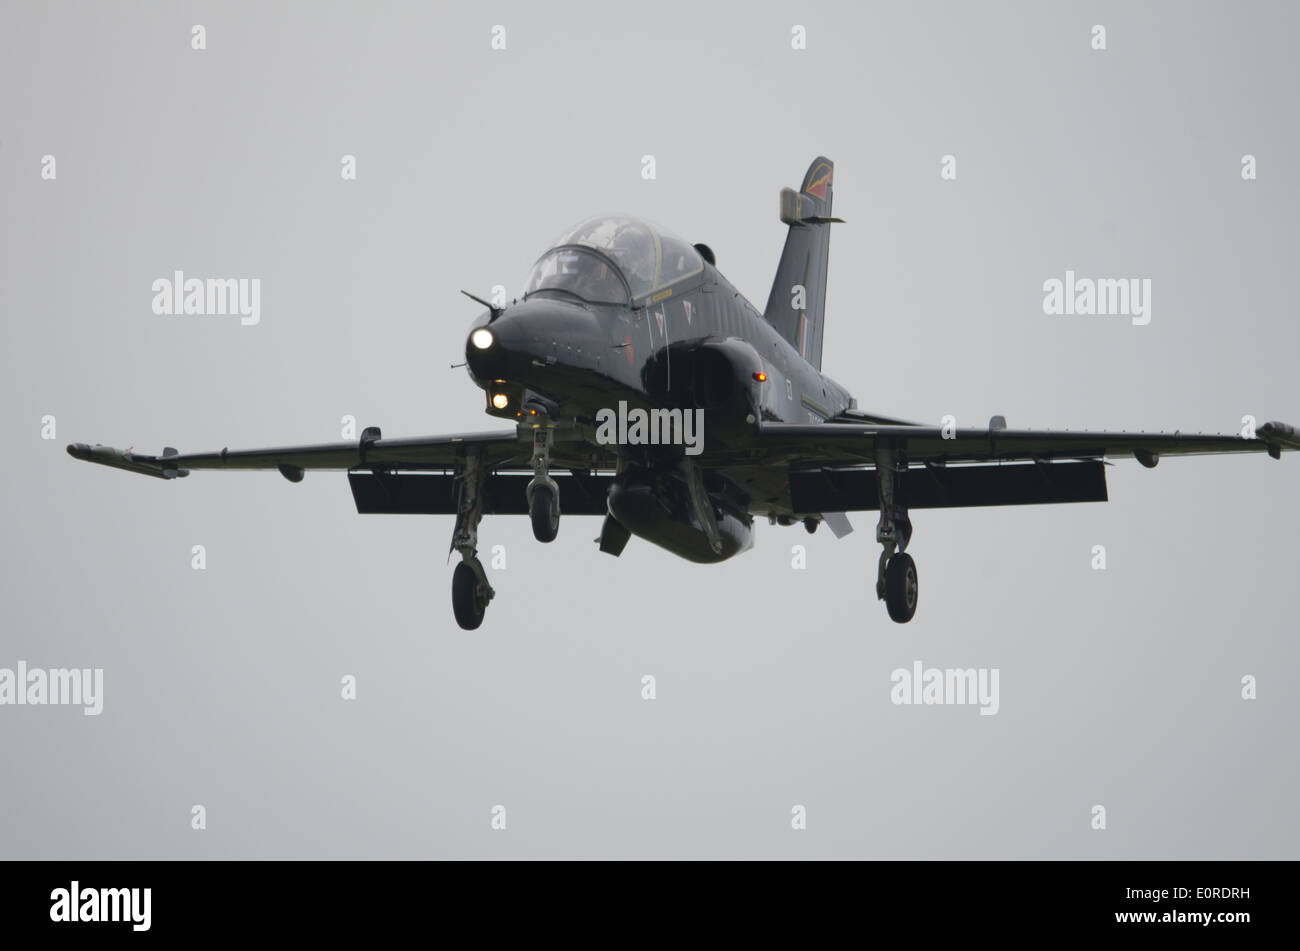 A Hawk landing at RAF Valley. Stock Photo